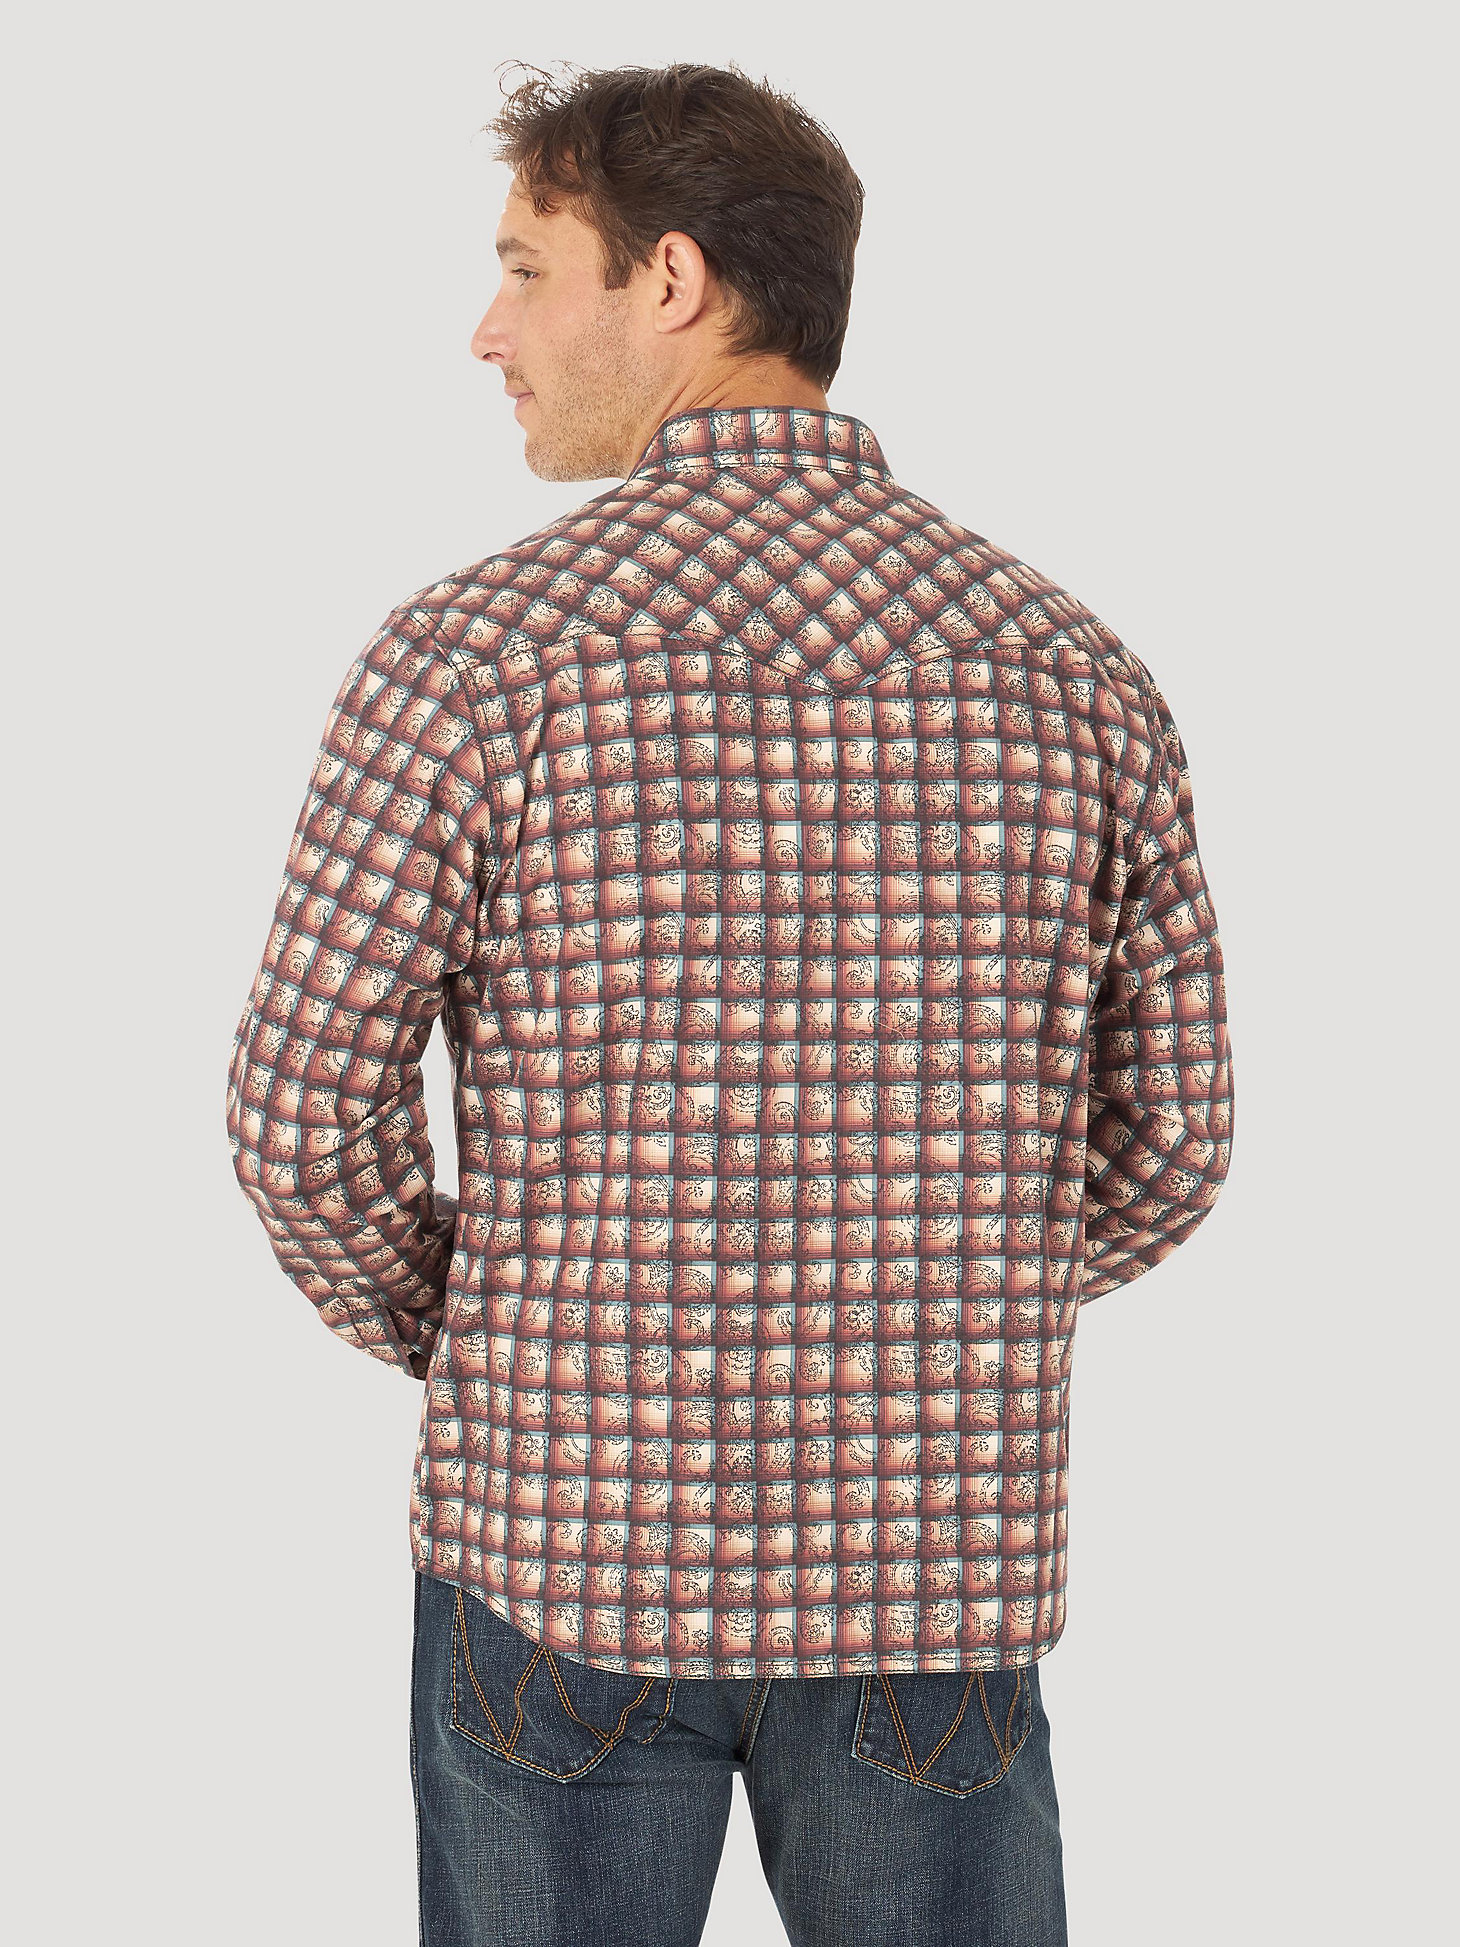 Men's Wrangler Retro® Premium Long Sleeve Western Snap Overprint Shirt in Ember alternative view 1